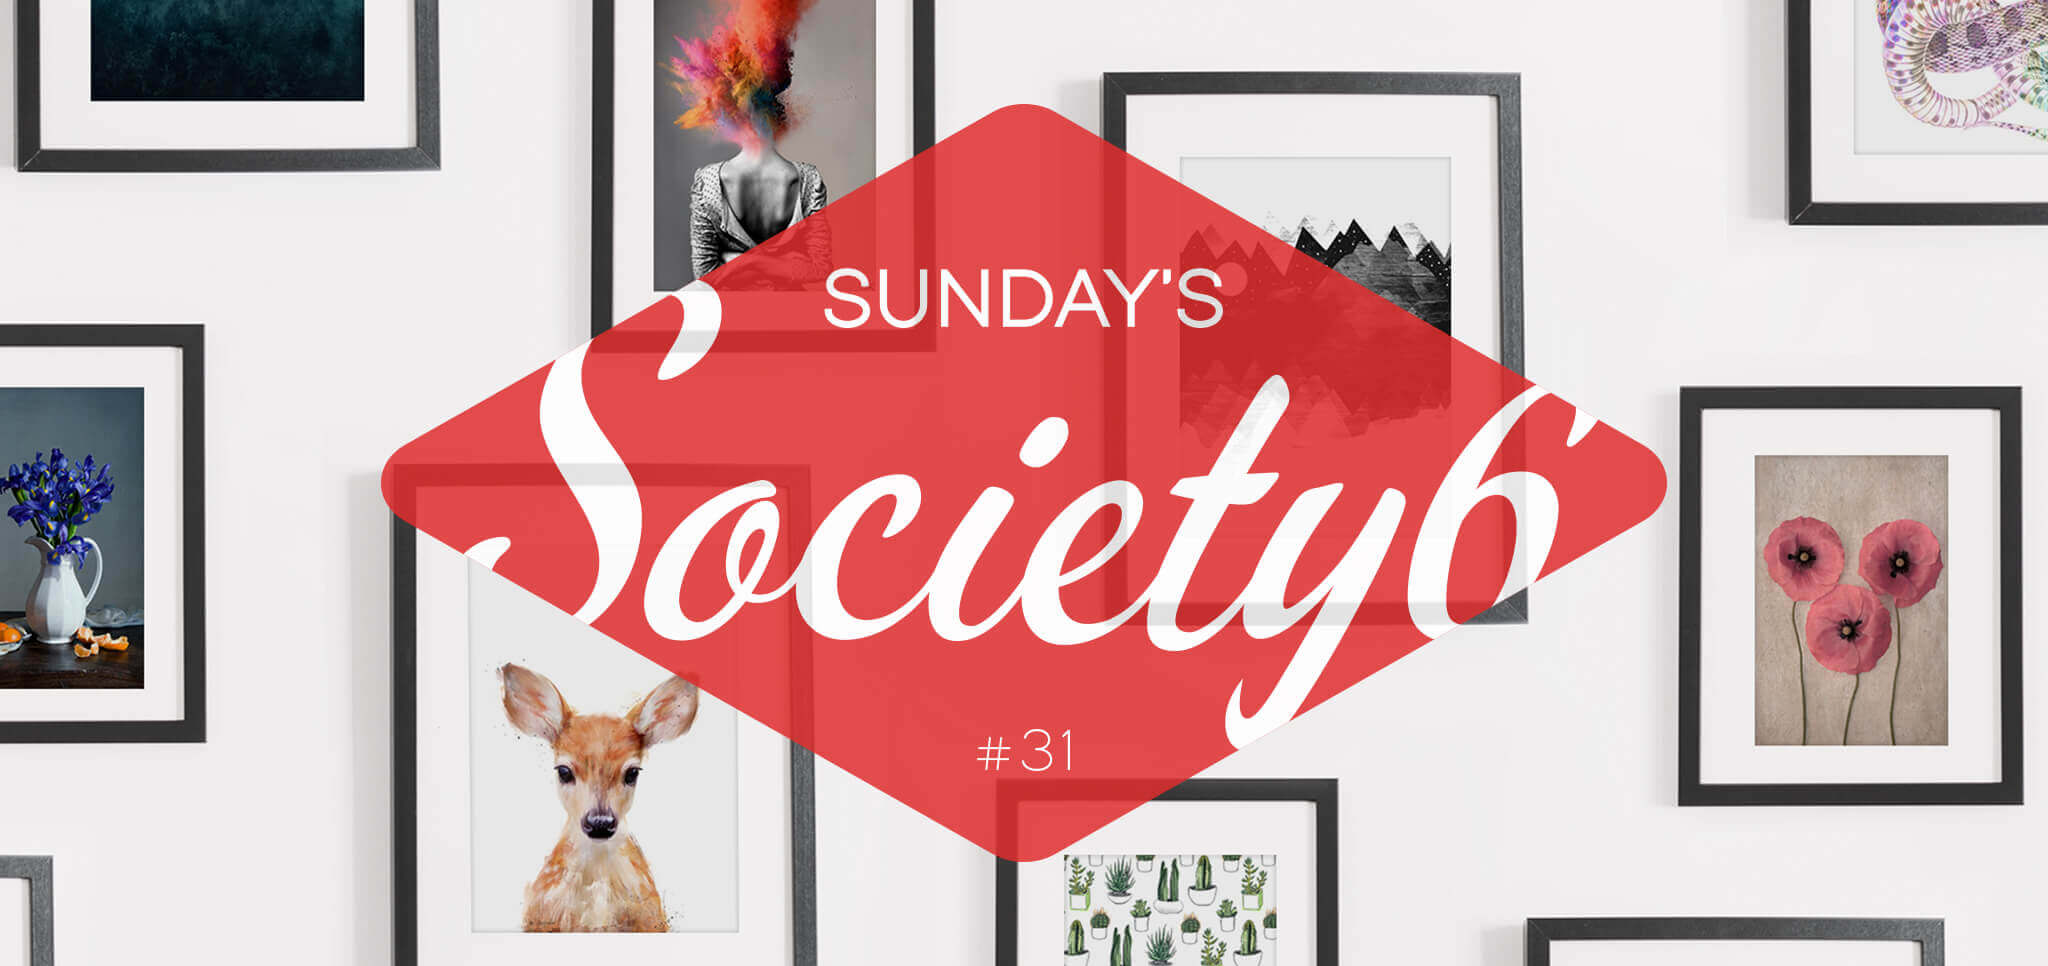 Sunday’s Society6 #31 | Pixel art